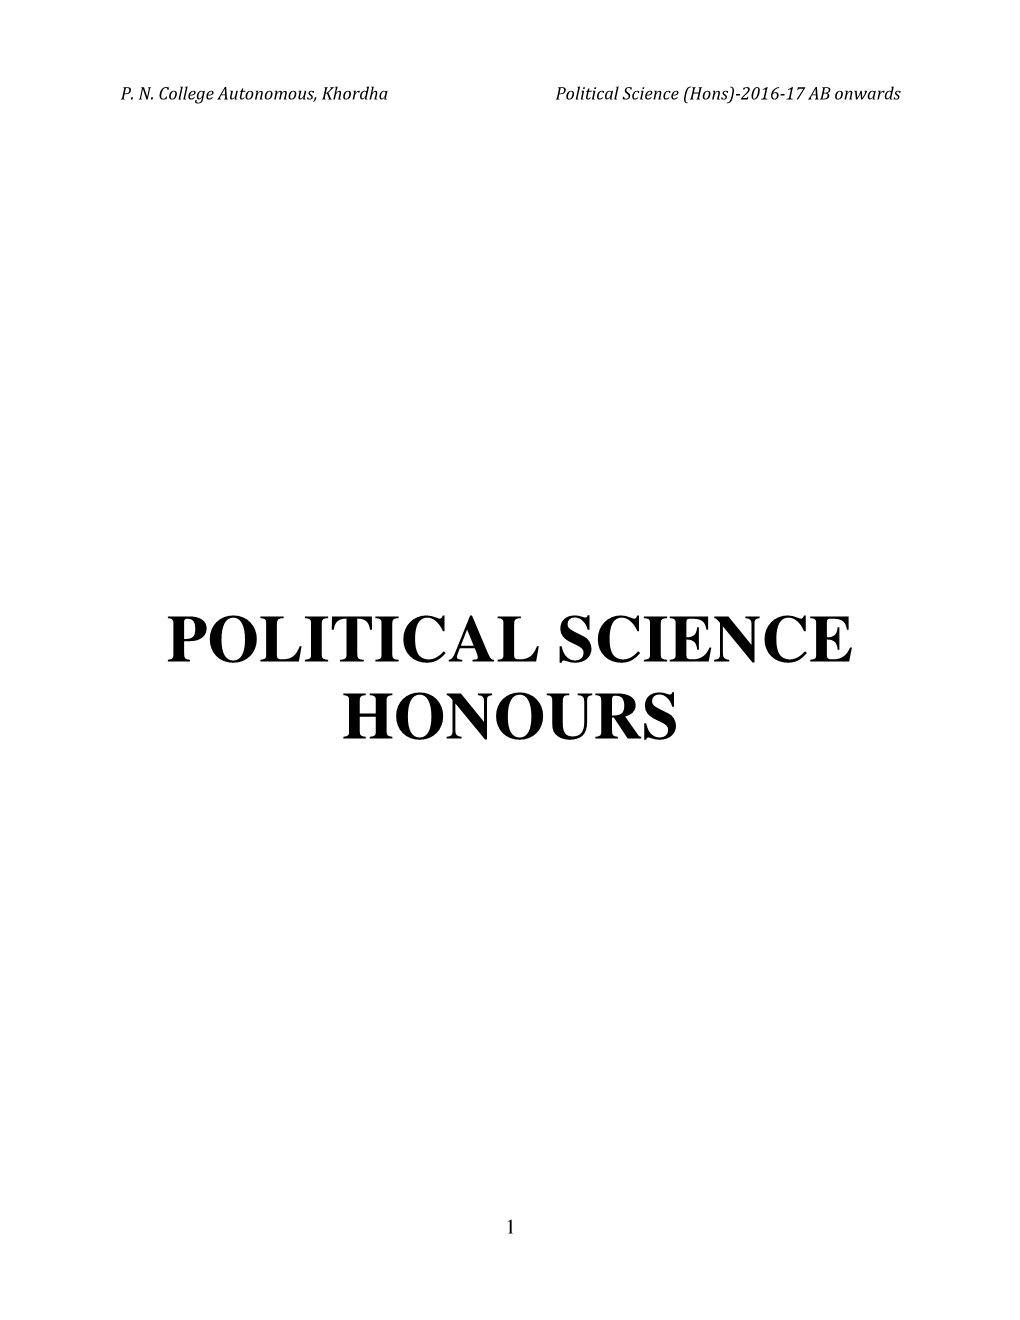 Political Science (Hons)-2016-17 AB Onwards